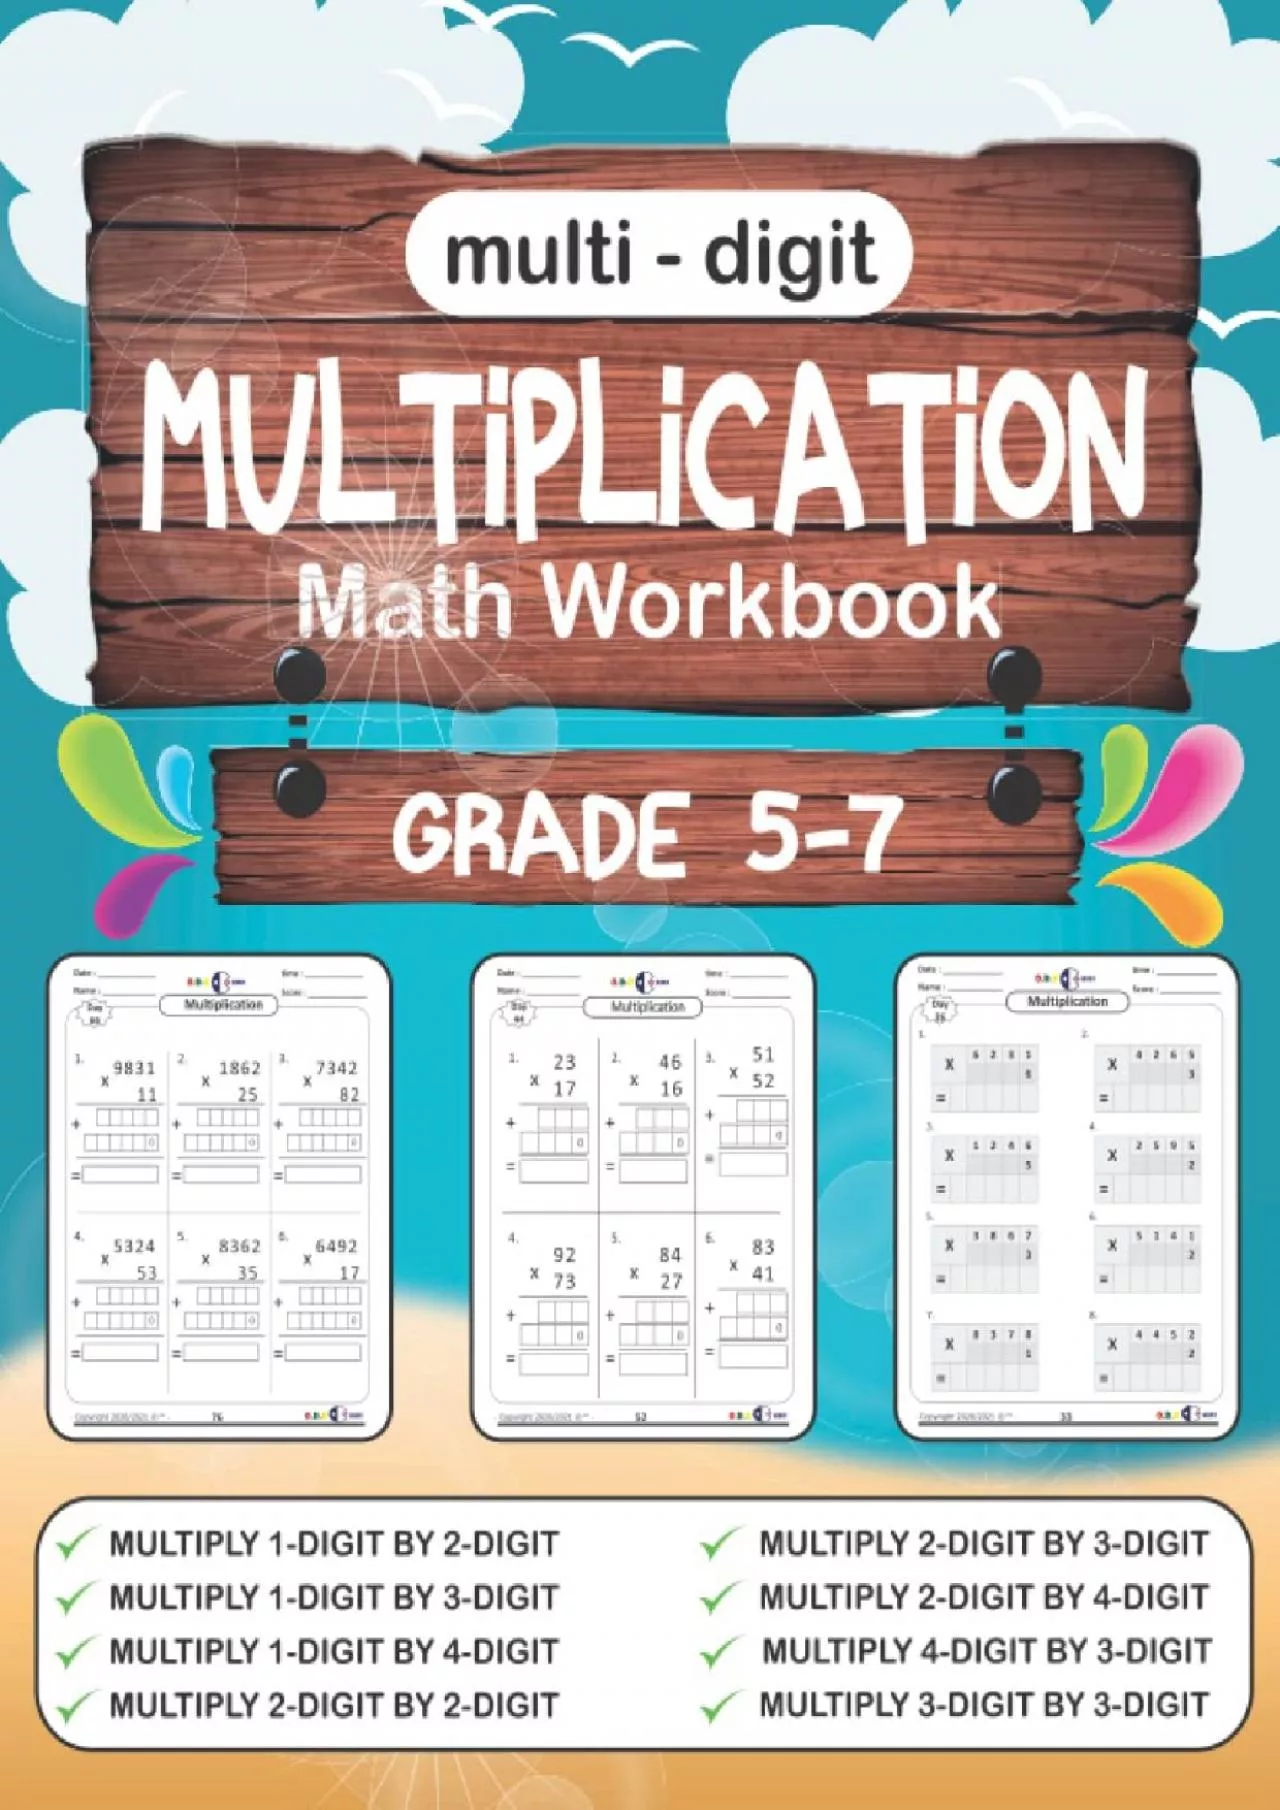 [EBOOK] Math Workbook multi-digit multiplication grade 5-7: Math workbook for learning:Multi-Digit